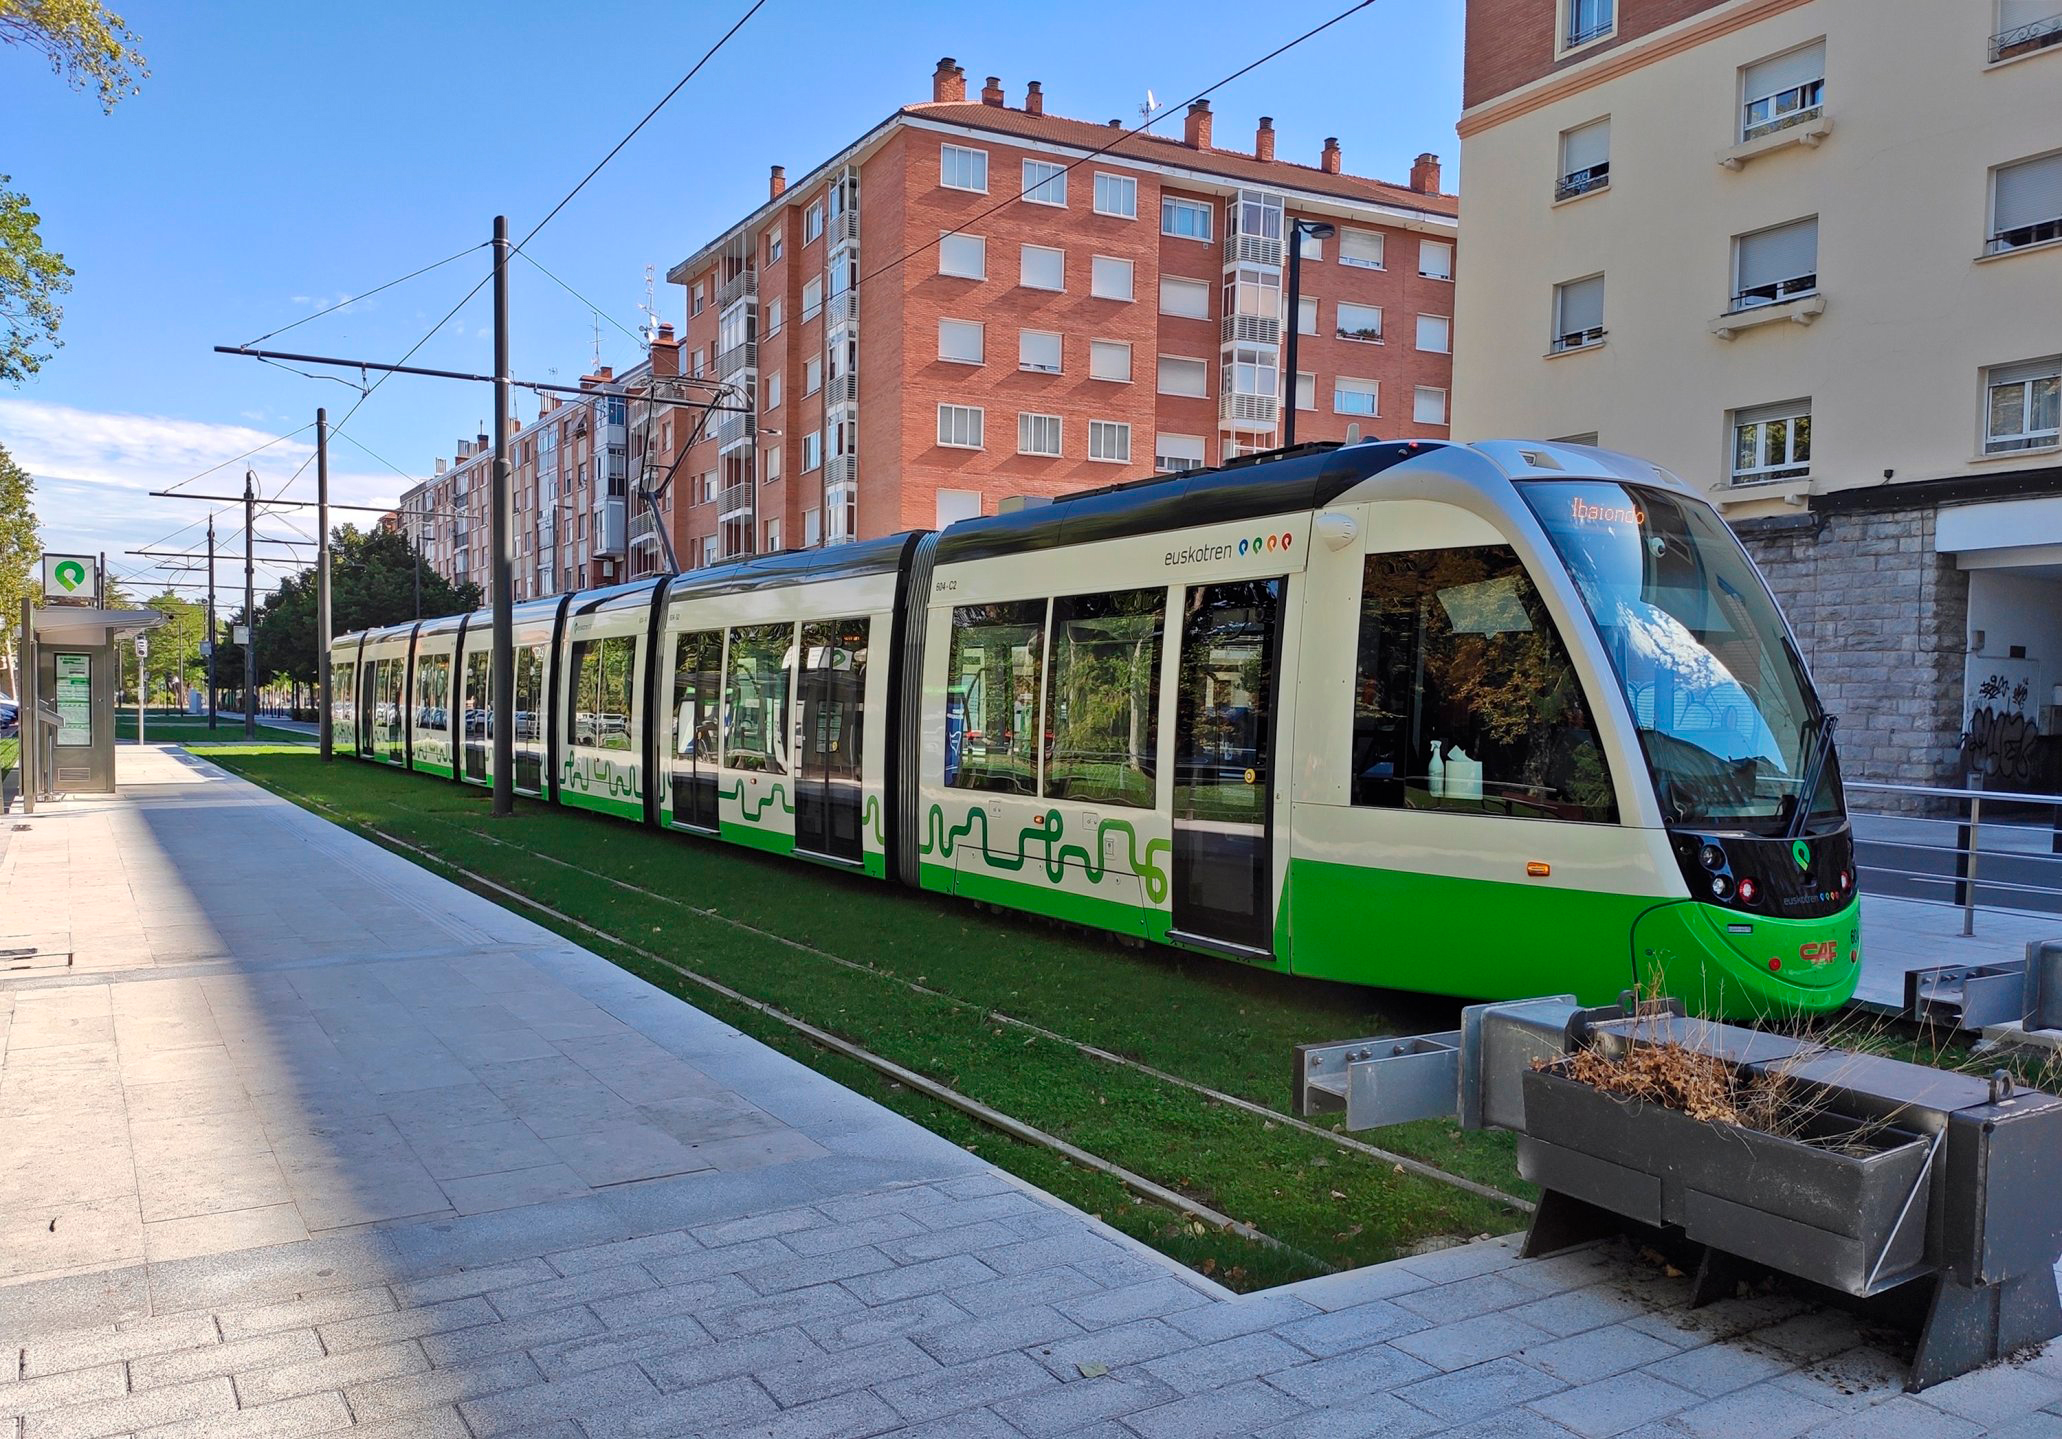 2011. Tranvía de Vitoria-Gasteiz, un proyecto de futuro.